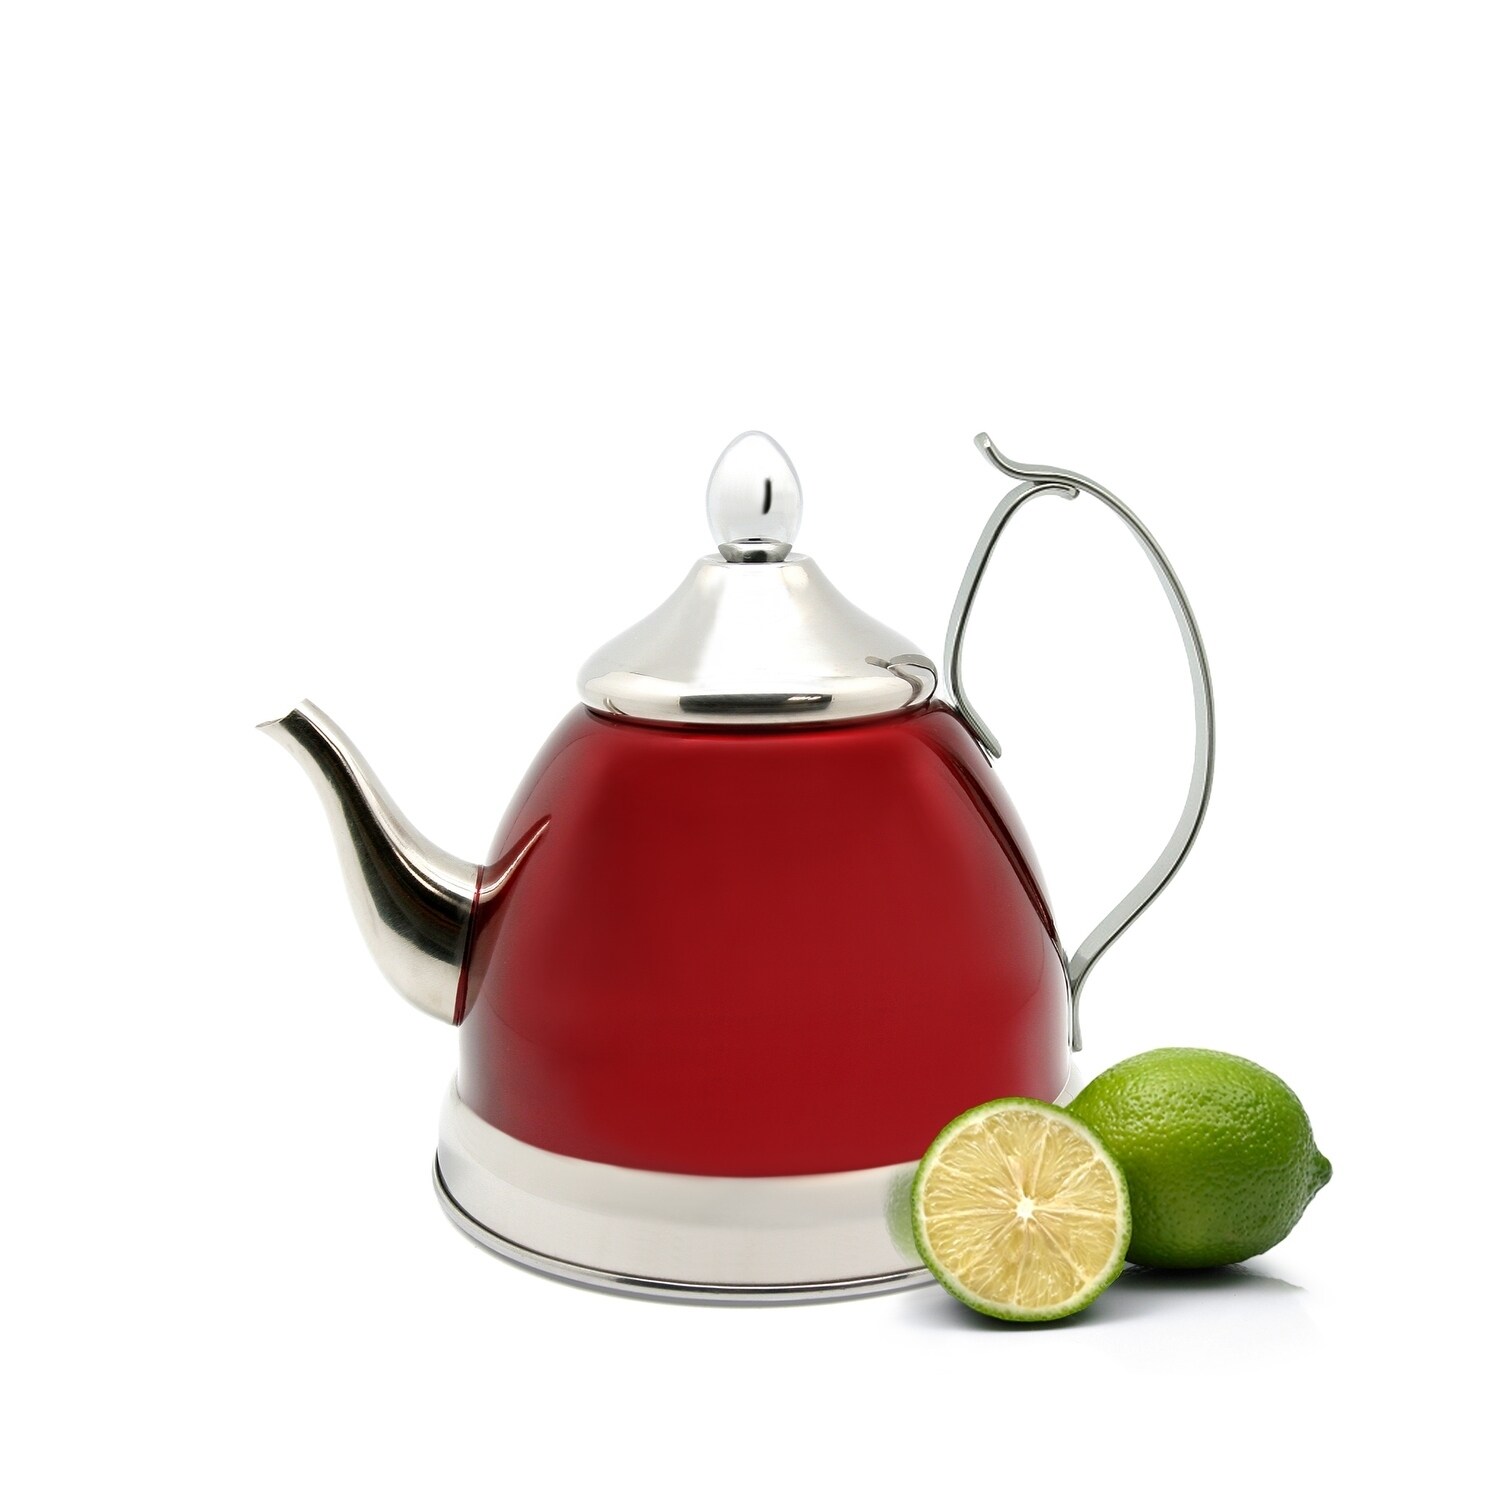 https://ak1.ostkcdn.com/images/products/10669200/Creative-Home-Nobili-Tea-1.0-Qt-Stainless-Steel-Cranberry-Tea-Kettle-Tea-Pot-with-Infuser-Basket-a71338d6-51b0-44ac-8c0c-d42a4c19e1e7.jpg